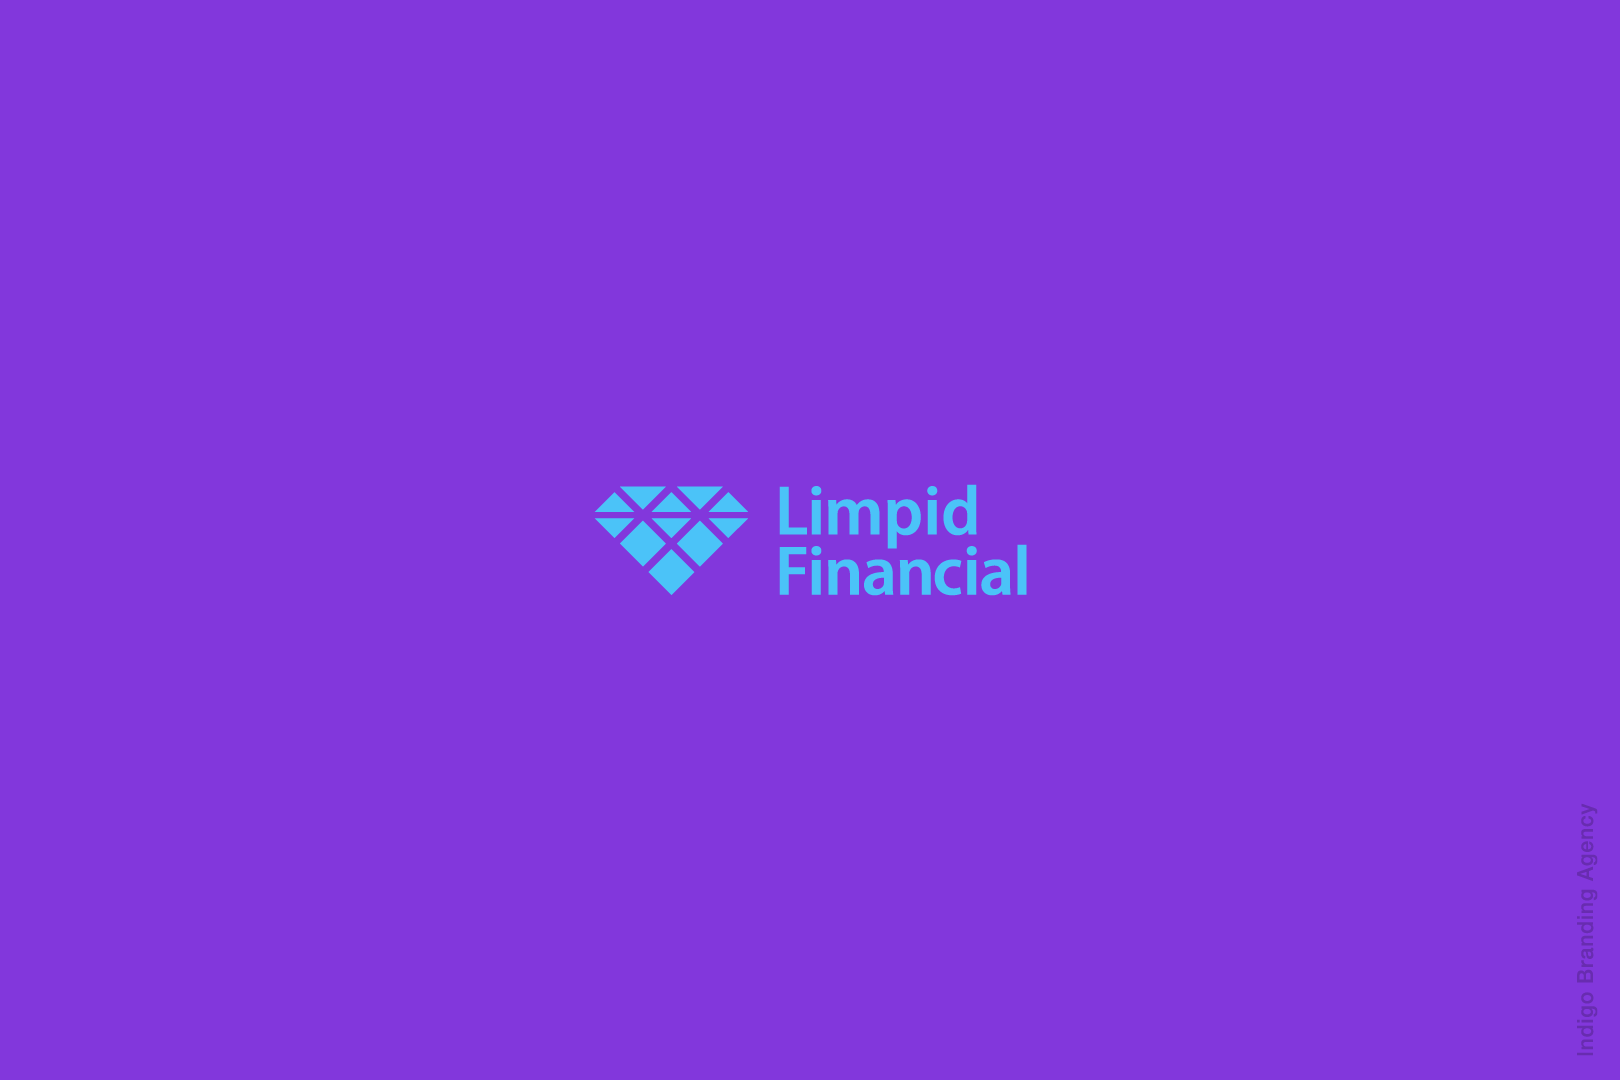 Limpid Financial branding by Indigo branding